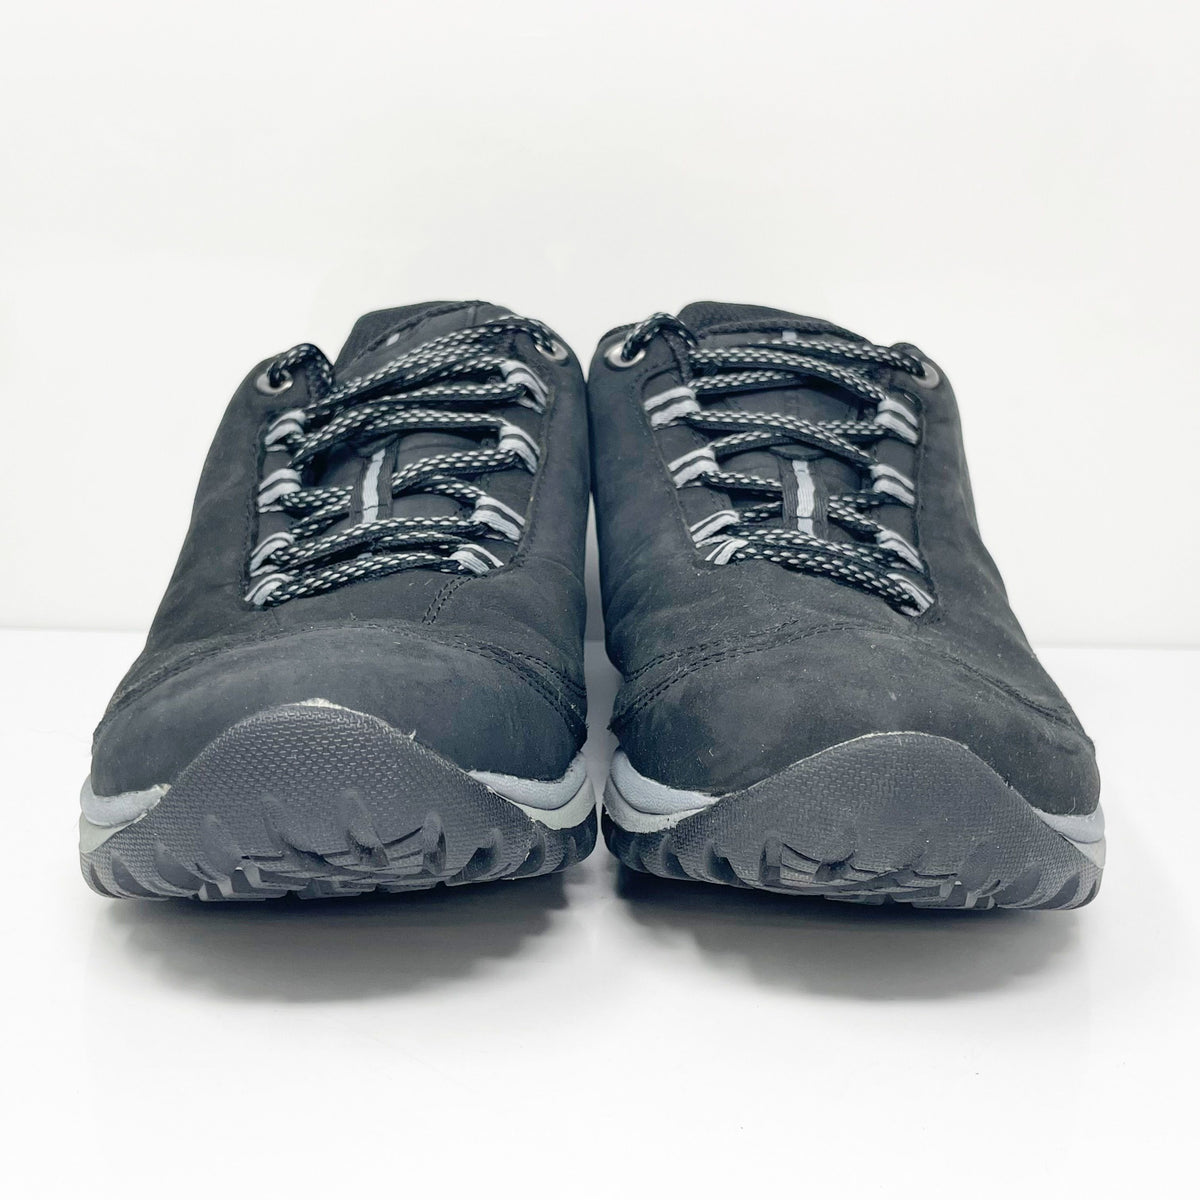 Merrell Womens Siren Traveller 3 J035334 Black Casual Shoes Sneakers S ...